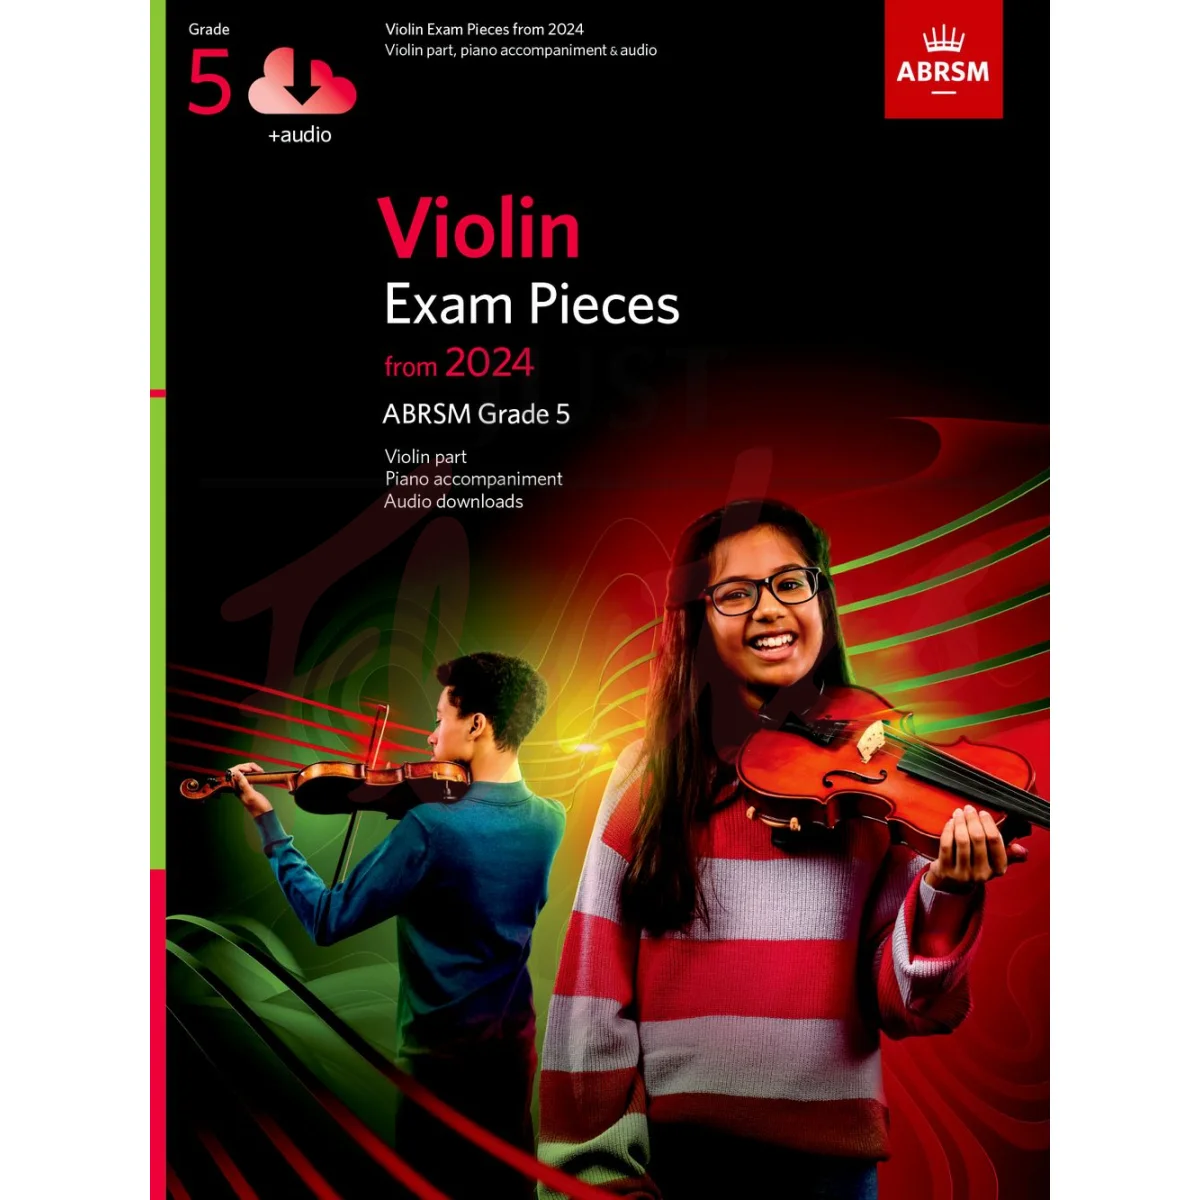 Violin Exam Pieces from 2024, Grade 5